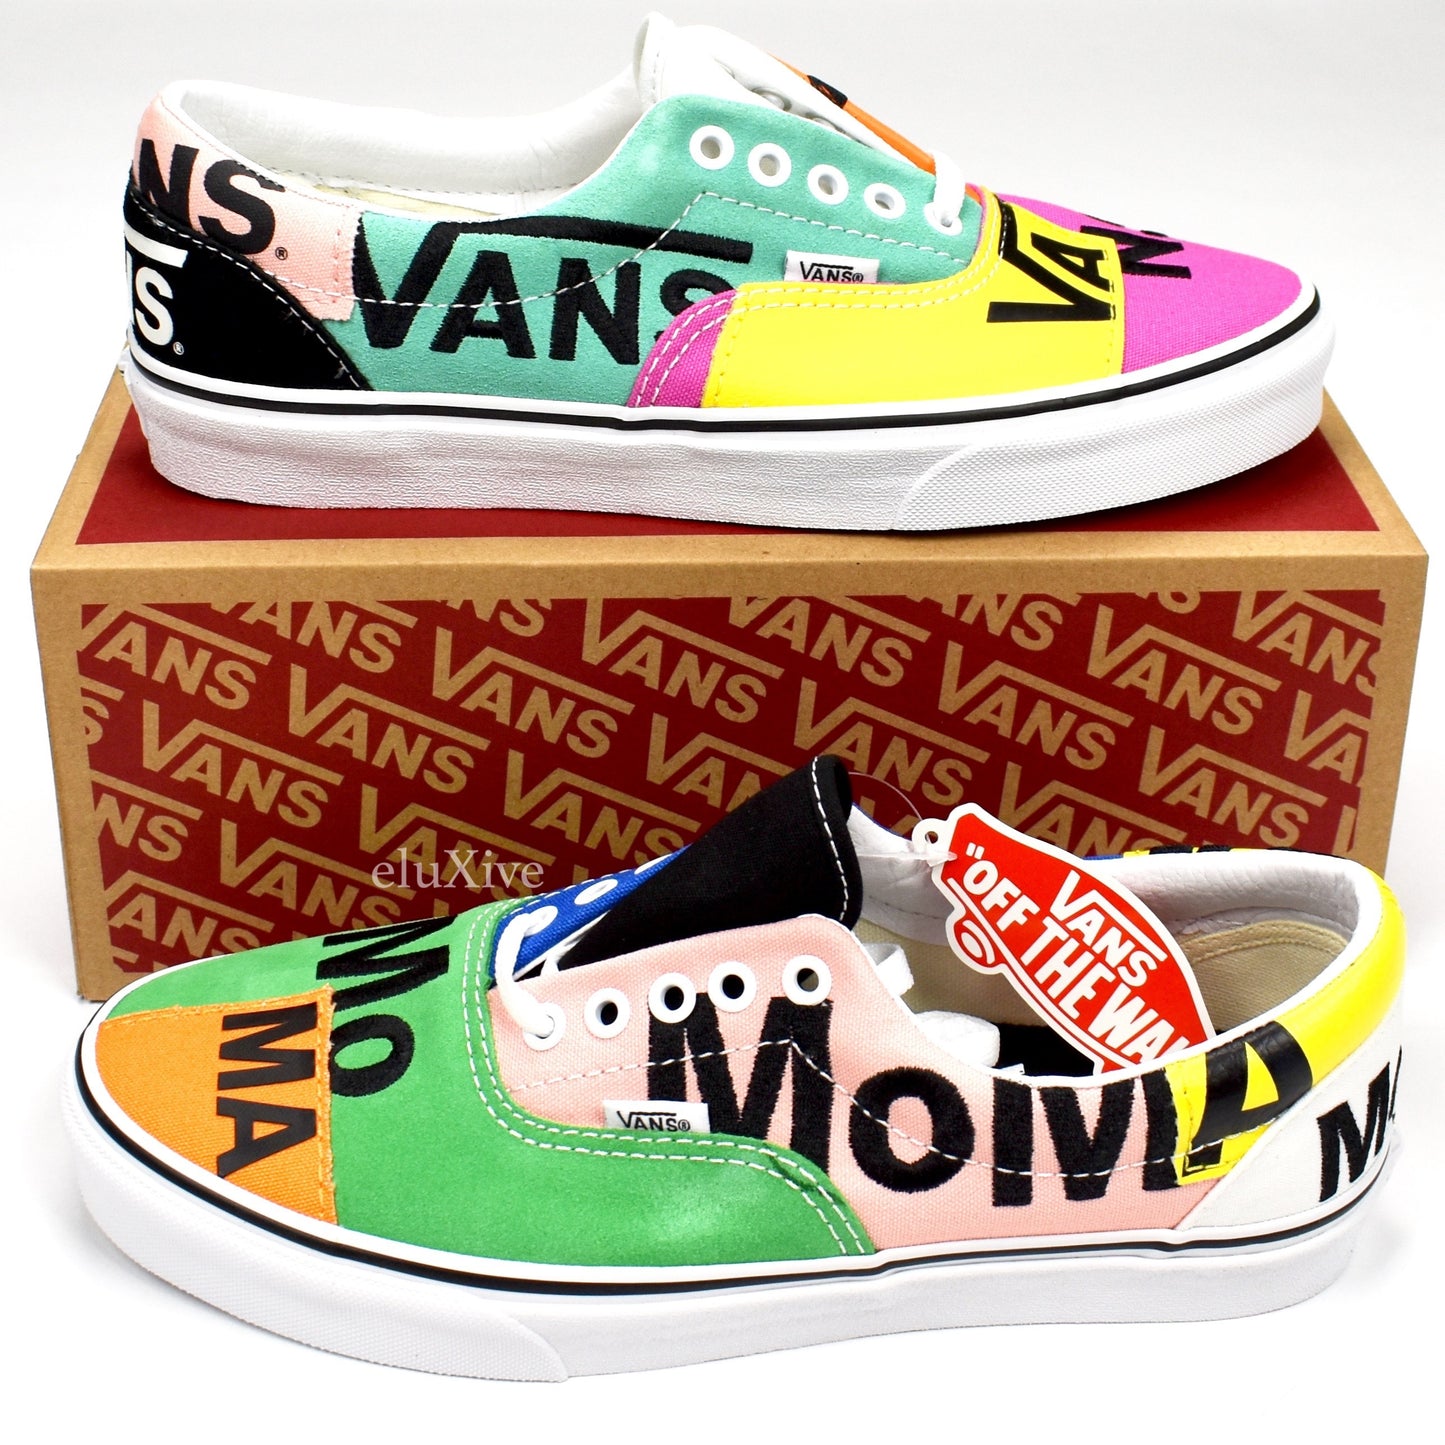 Vans x MoMA - Multicolor Patchwork Era Sneakers